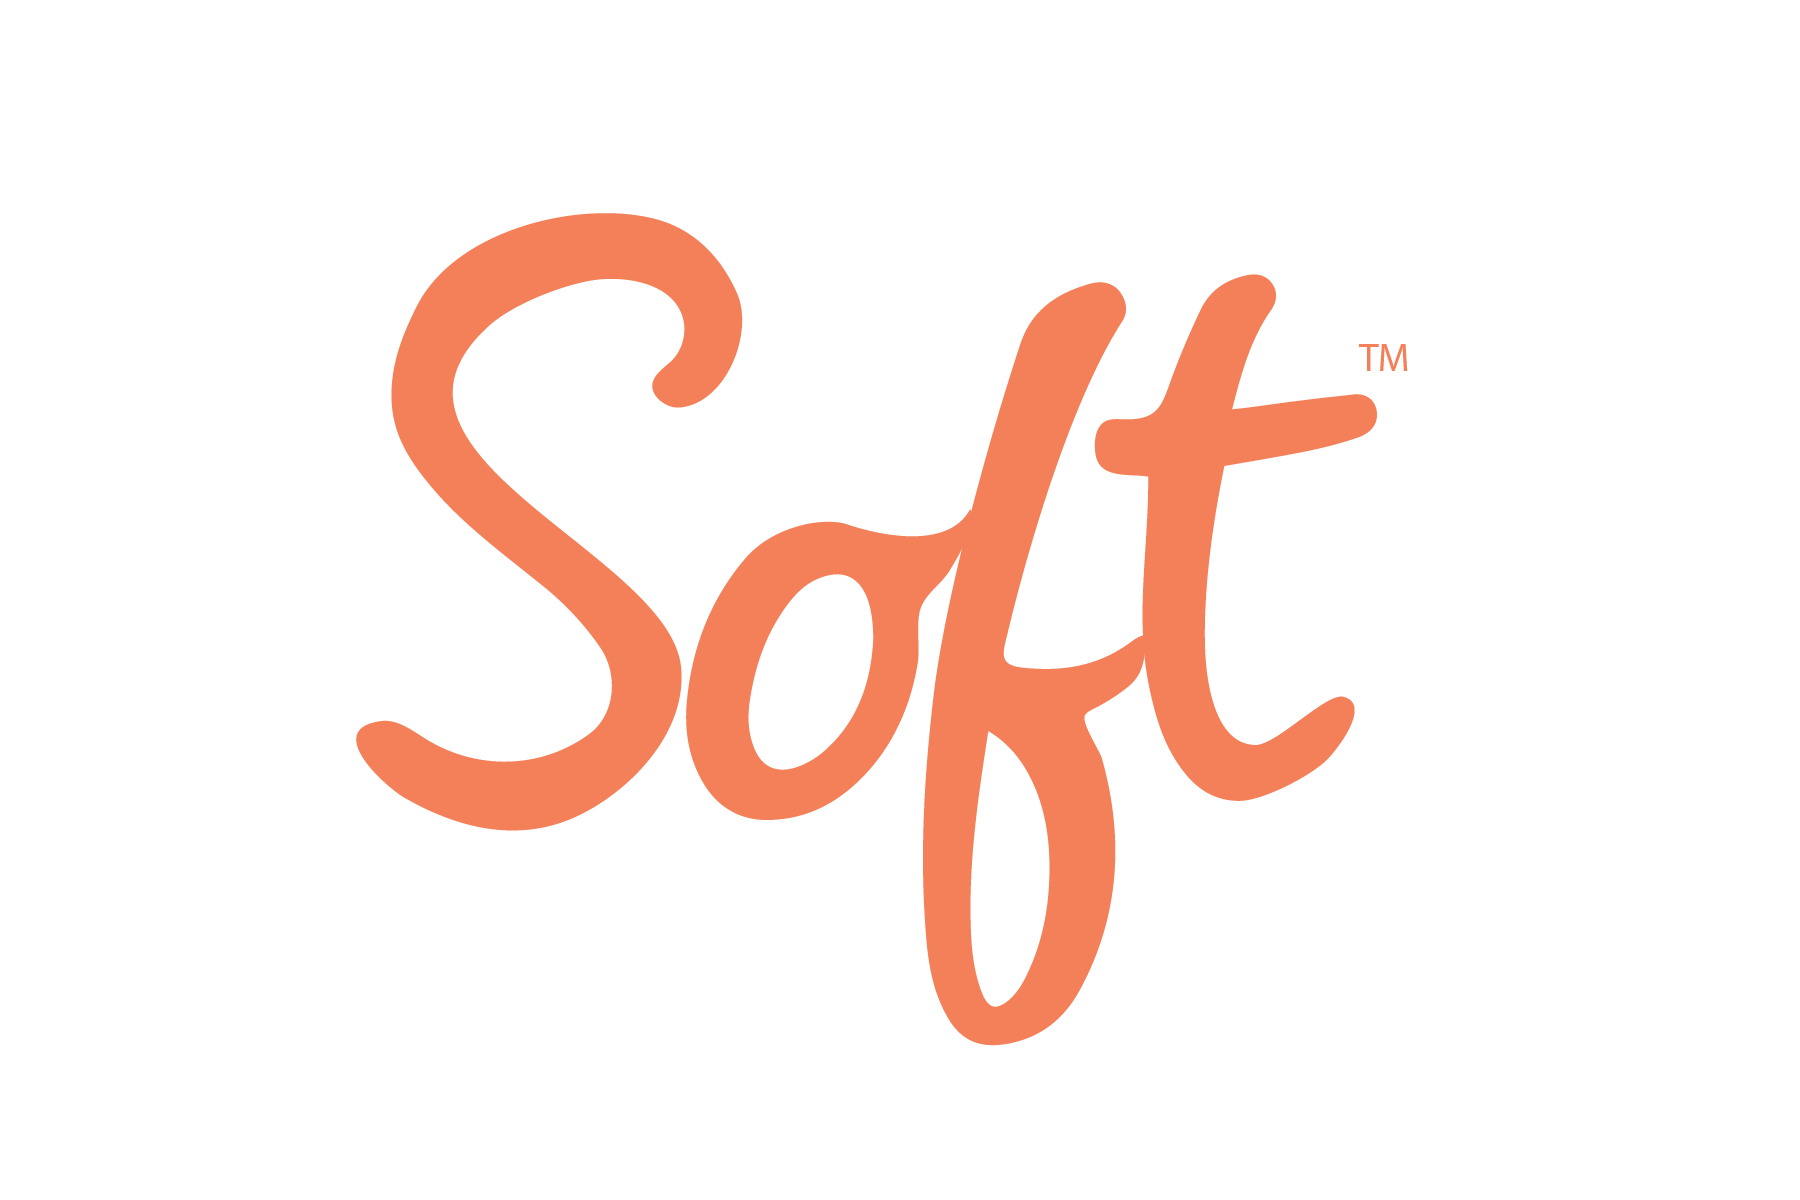 Soft logo PNG